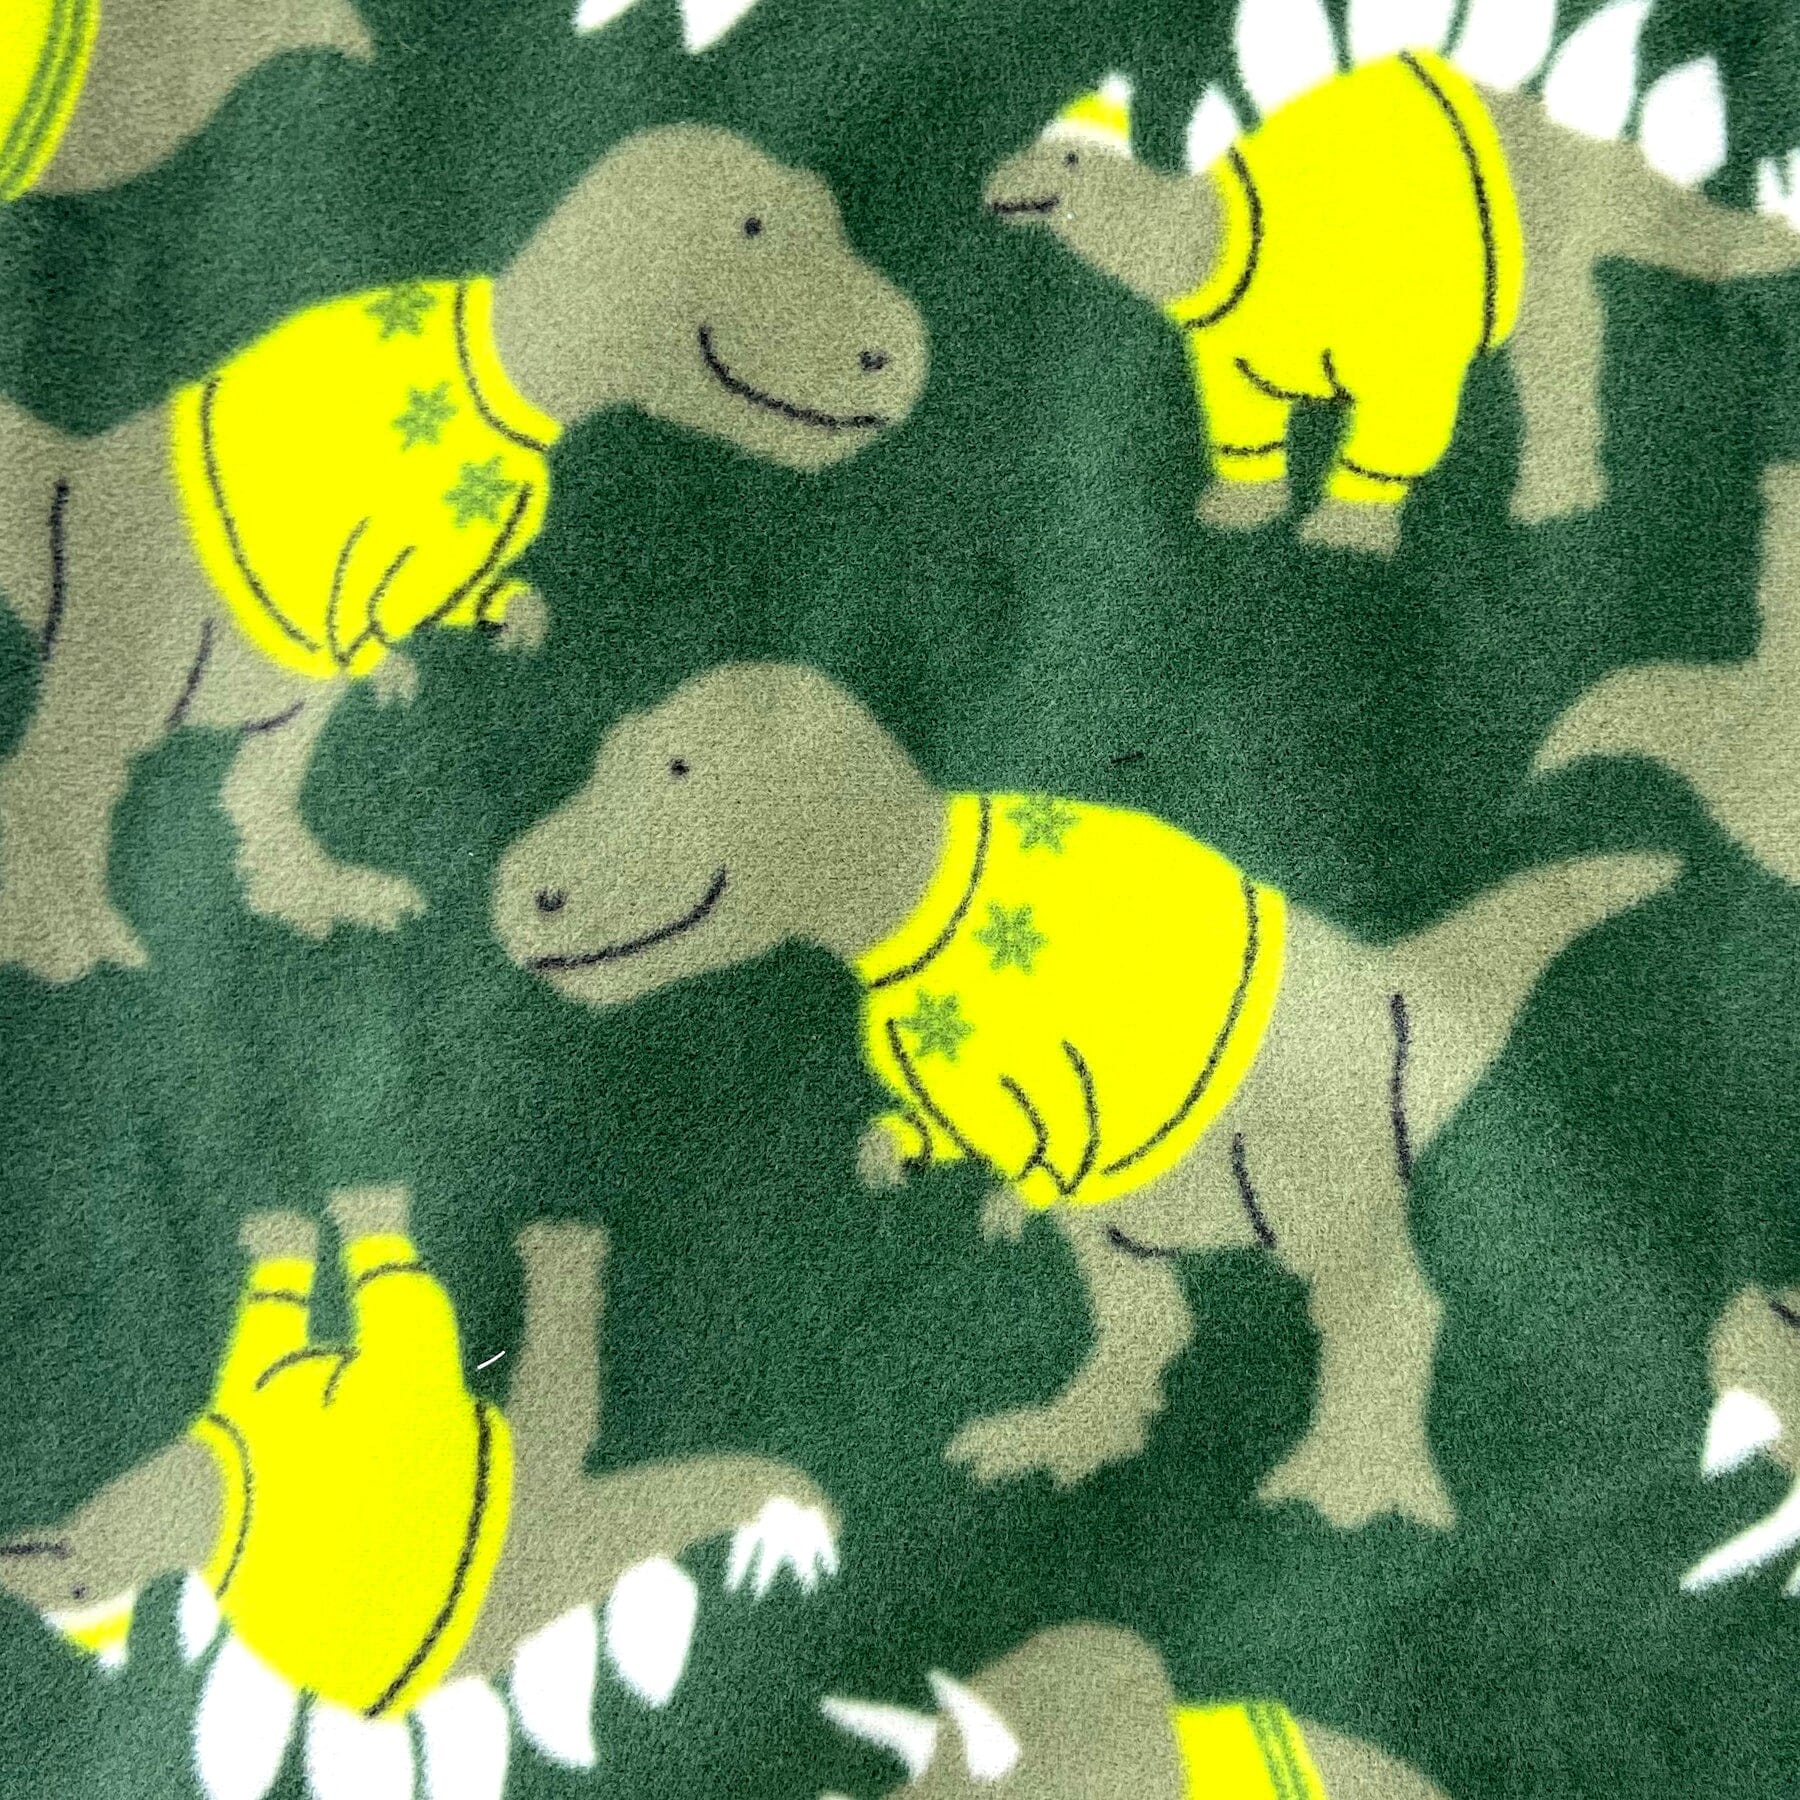 Men's Sleepwear Dinosaurs in Sweaters Print Soft Fleece Pajama Bottoms